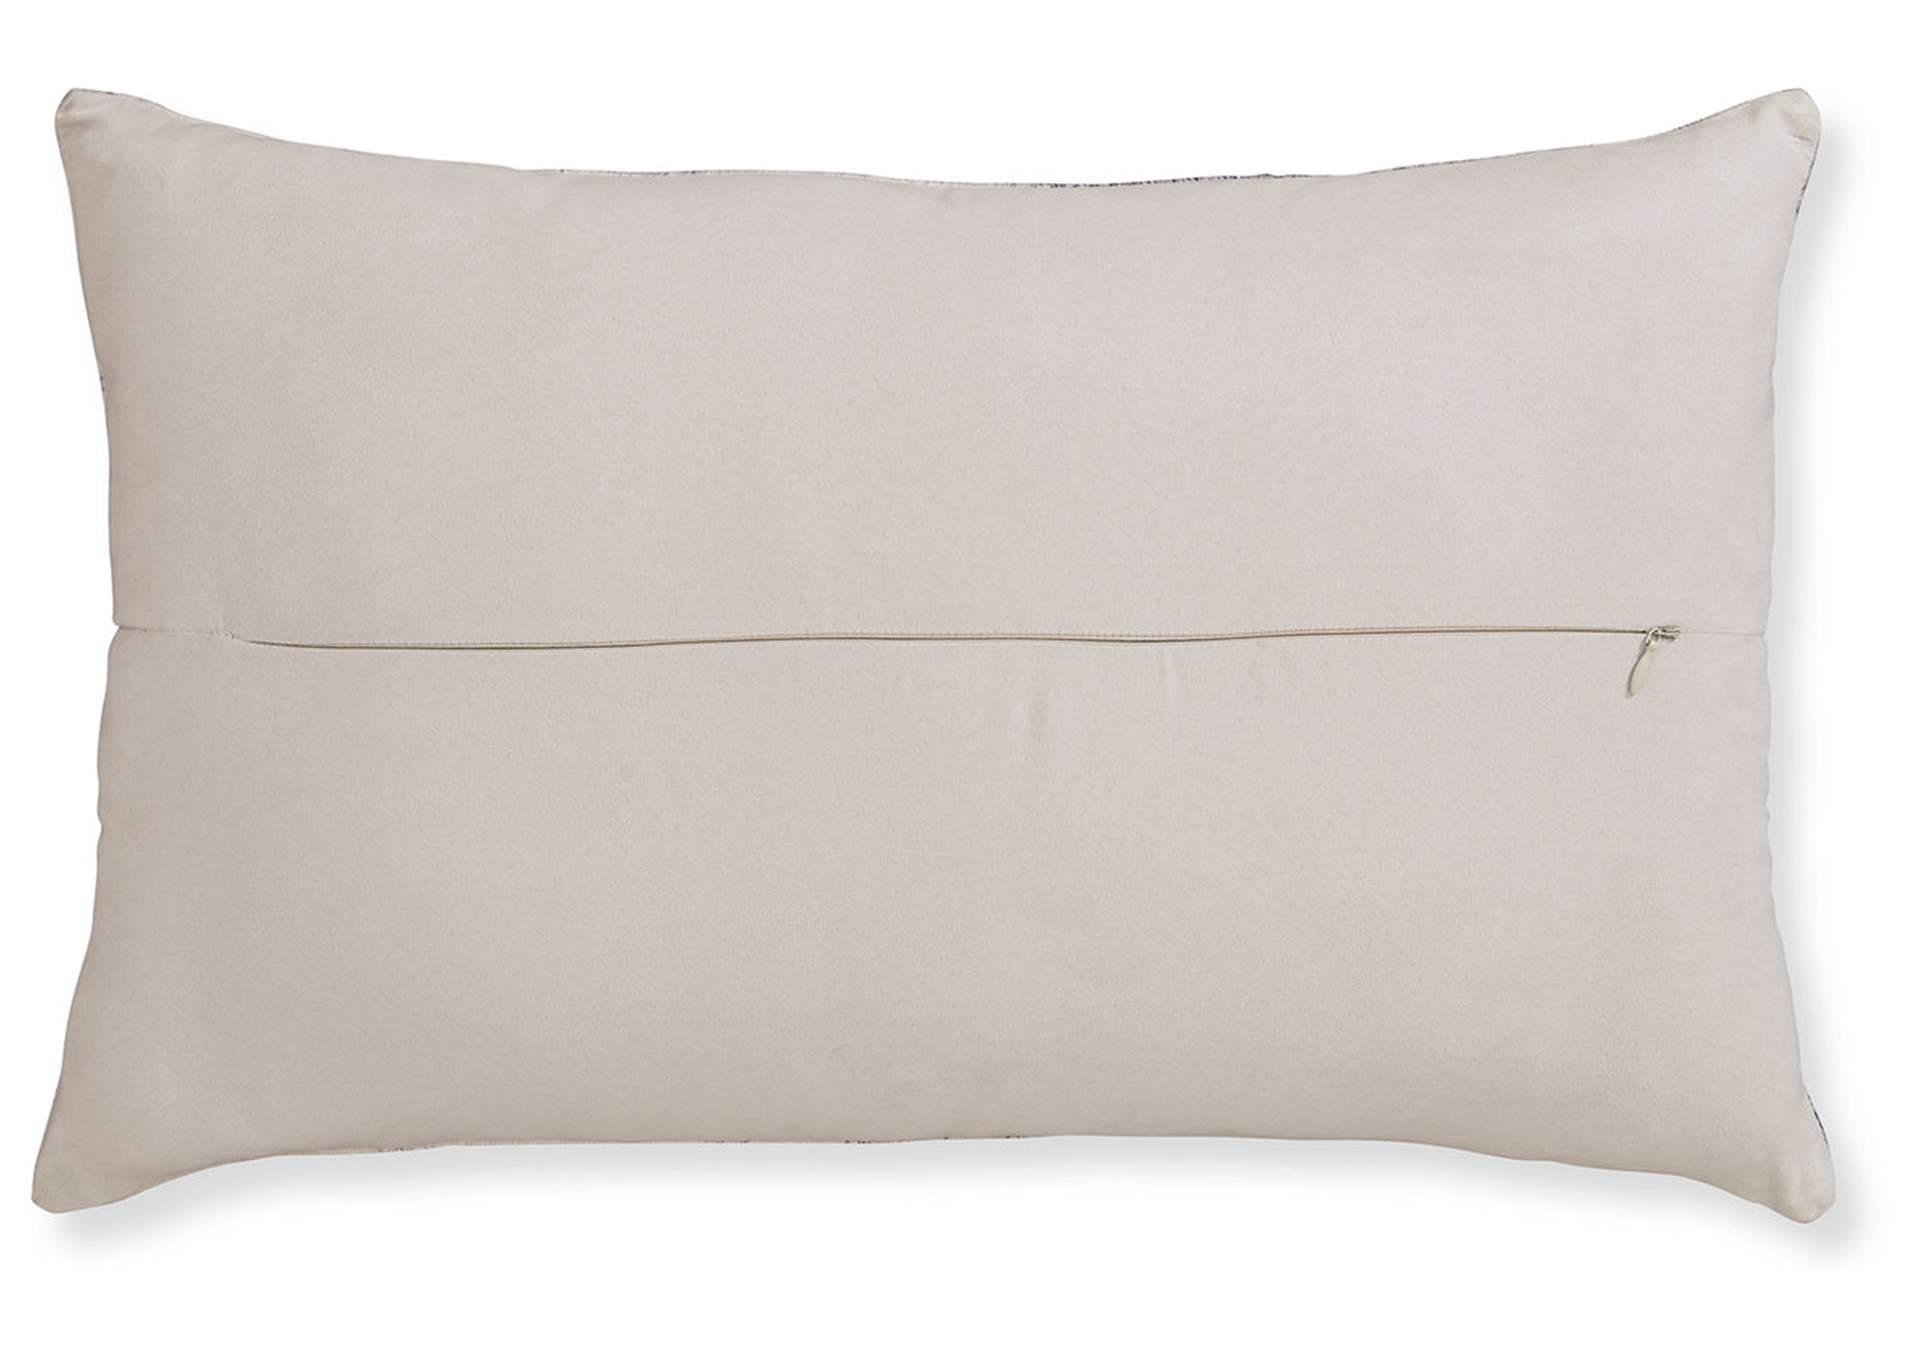 Pacrich Pillow,Signature Design By Ashley